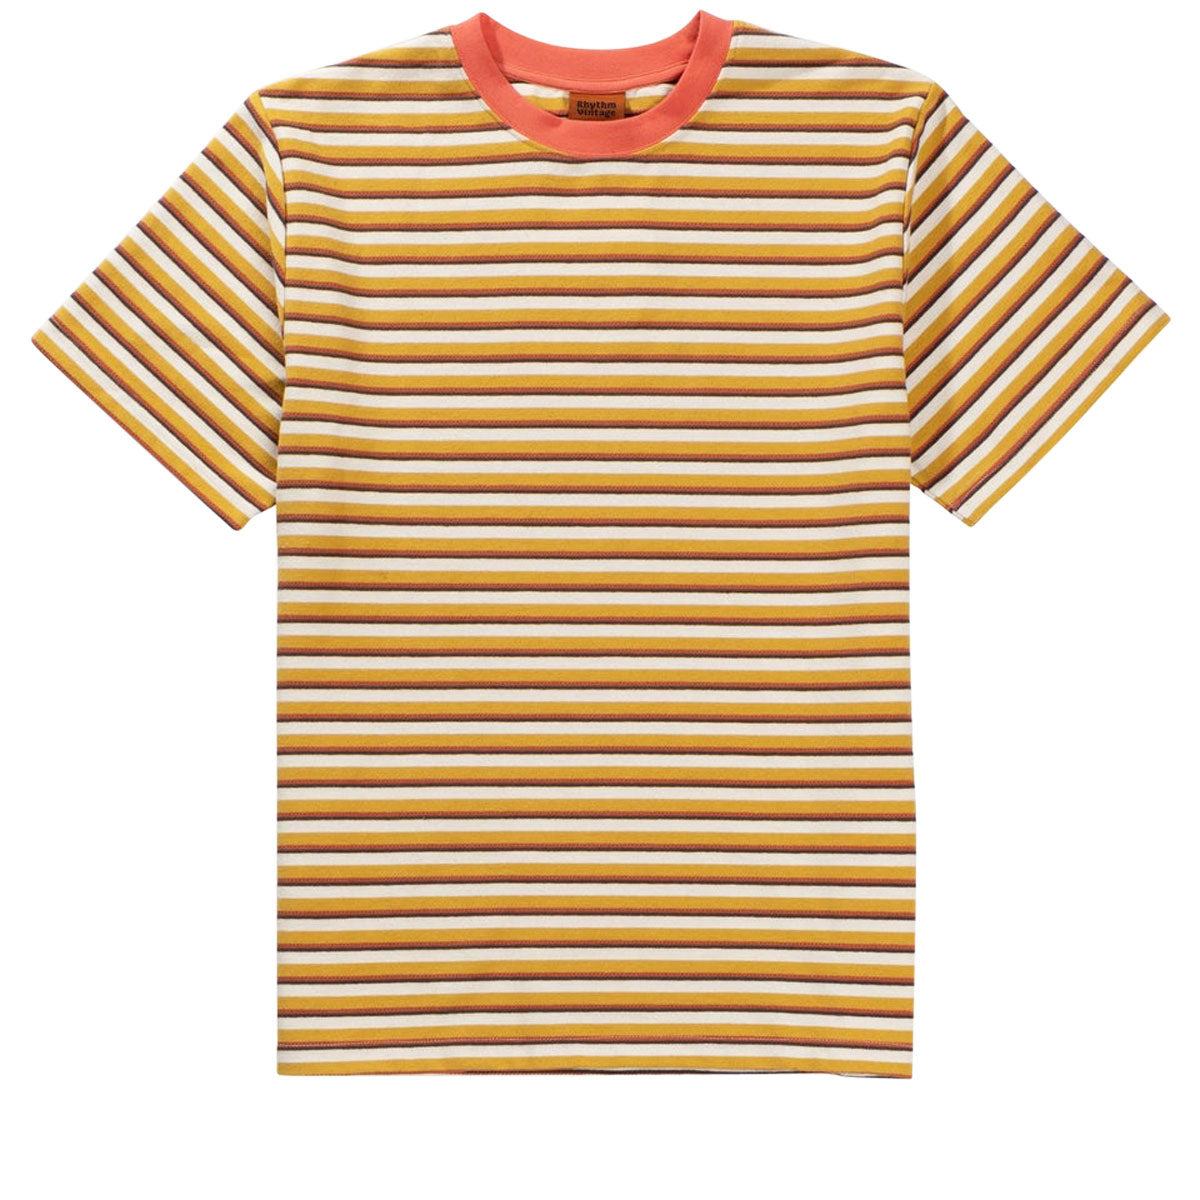 Rhythm Vintage Stripe T-Shirt - Mustard image 1